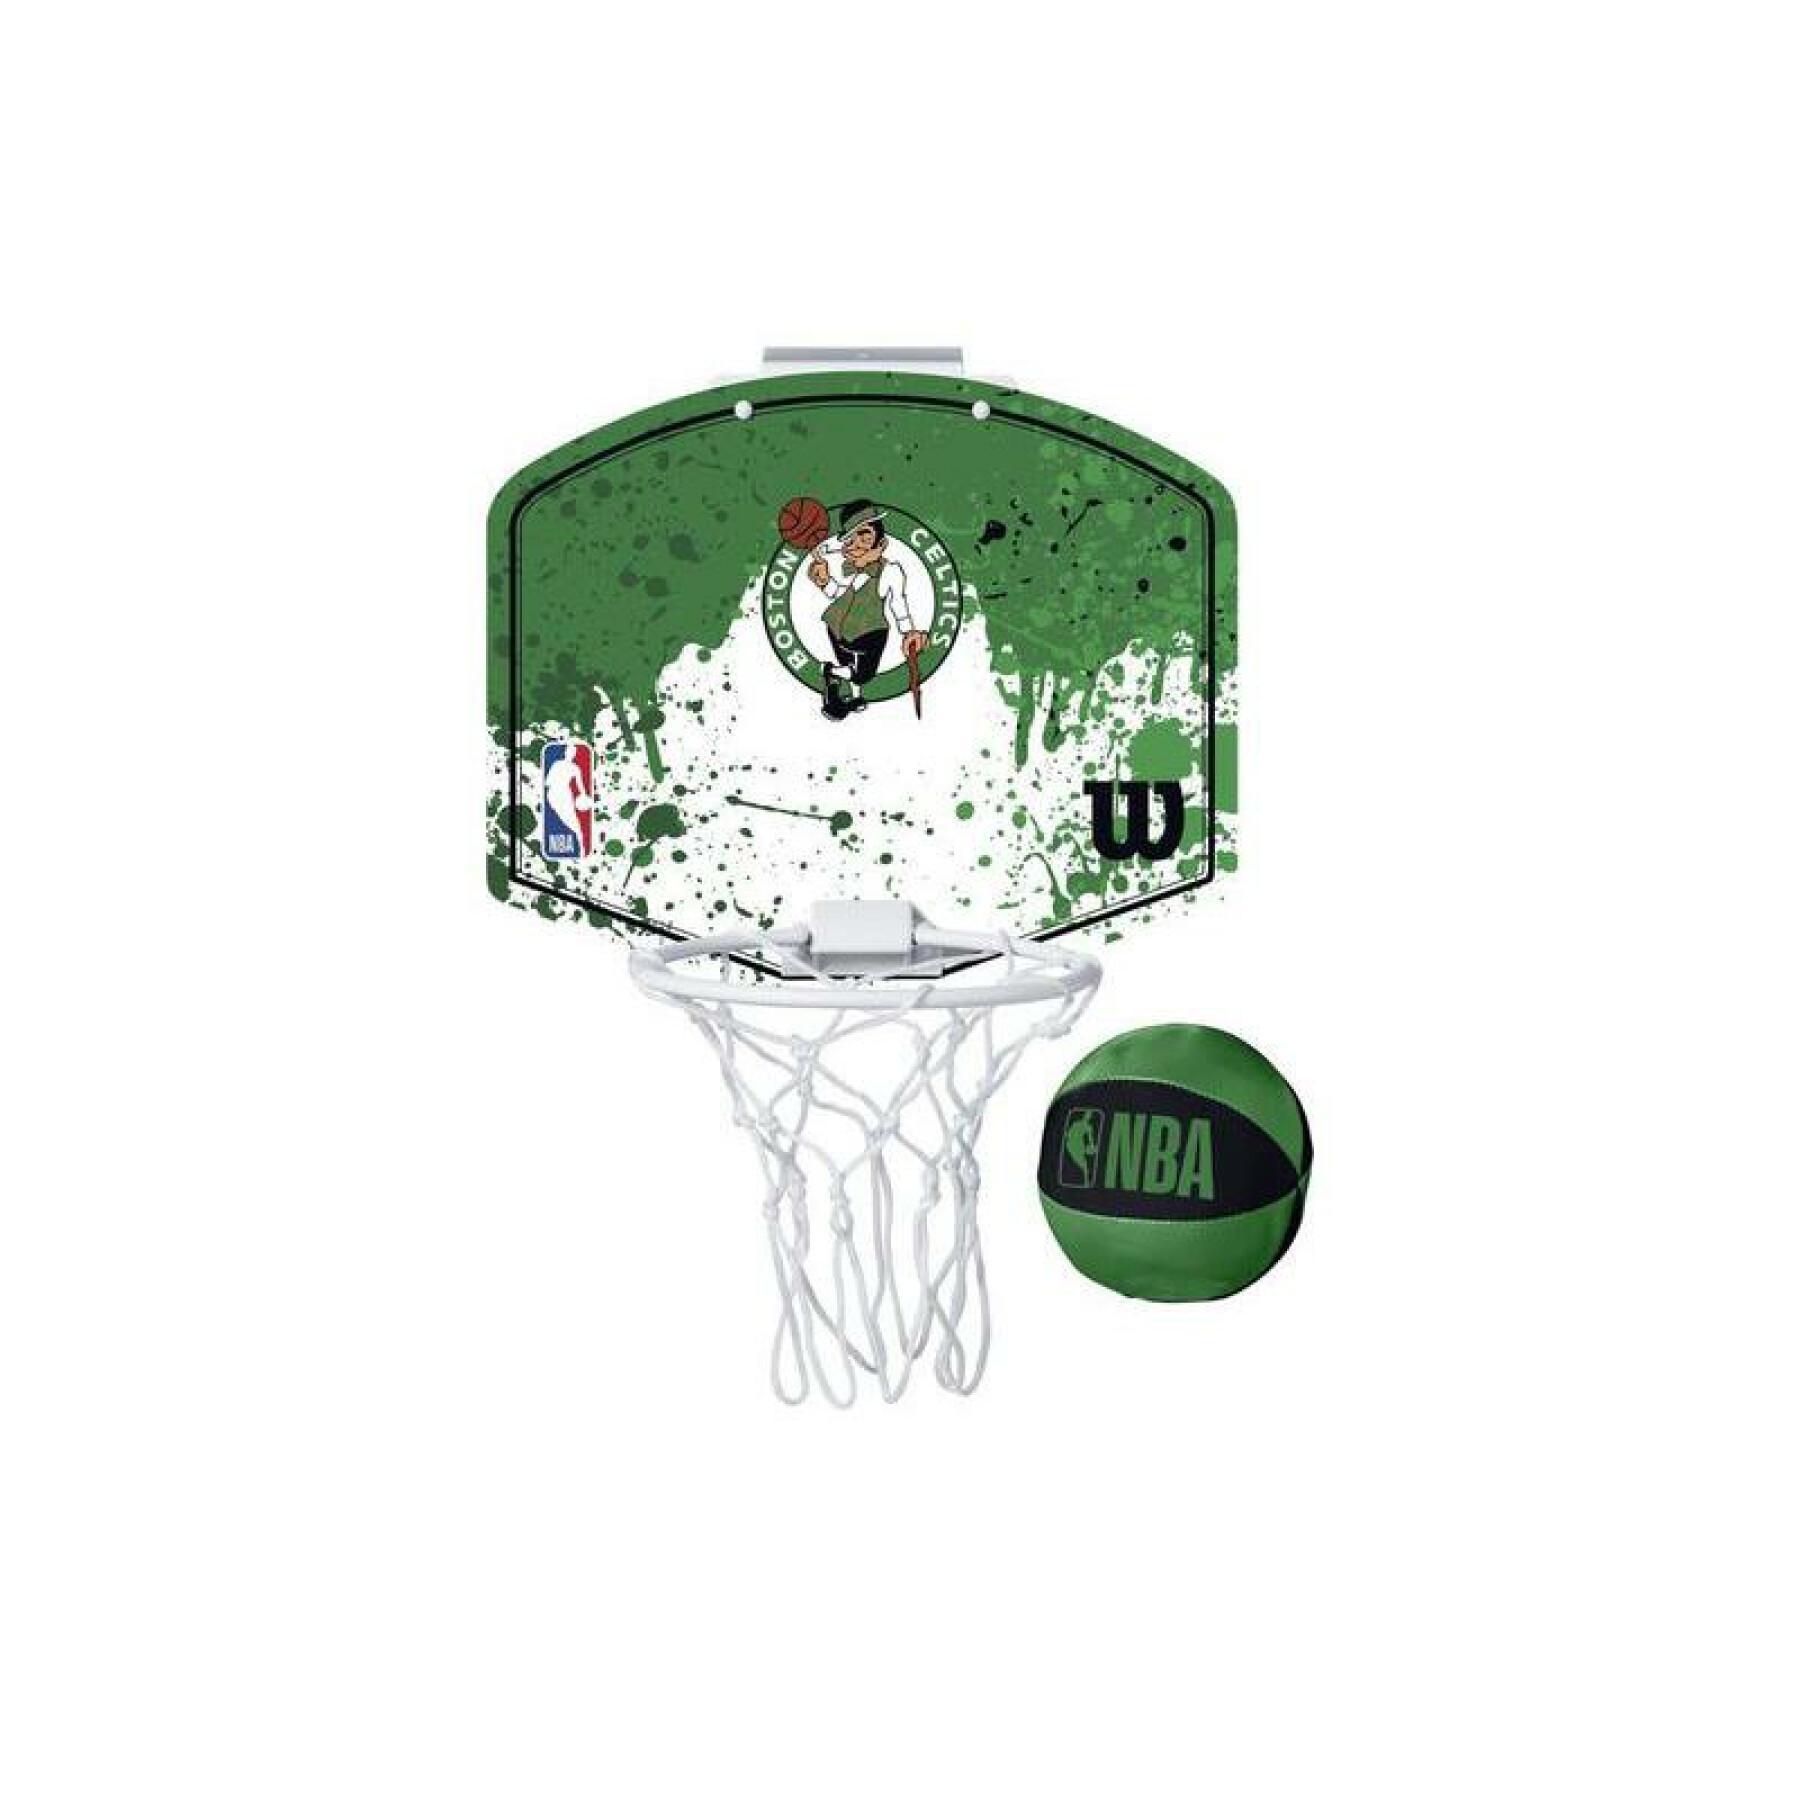 Mini cesta nba Boston Celtics